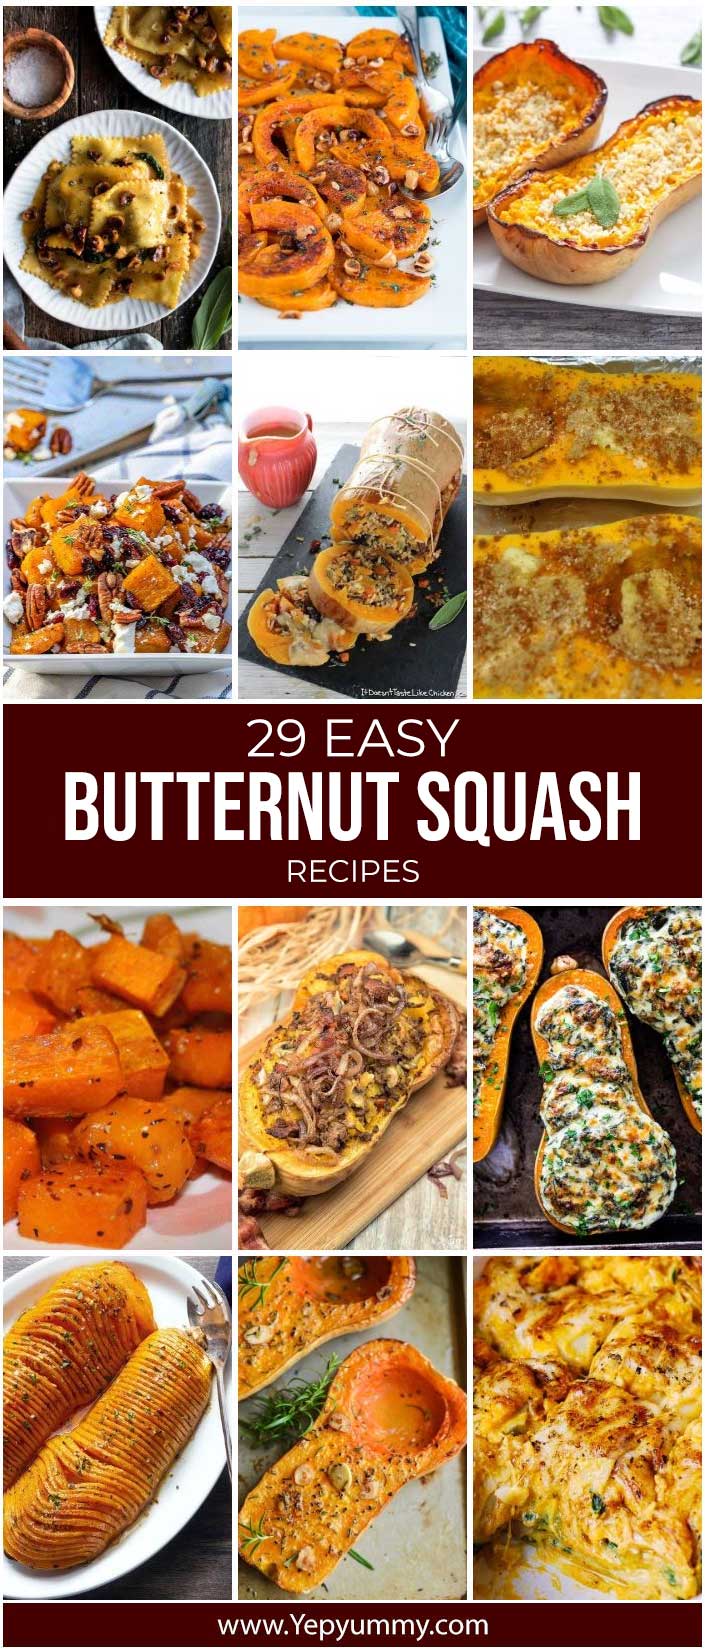 Ways To Enjoy With Butternut Squash